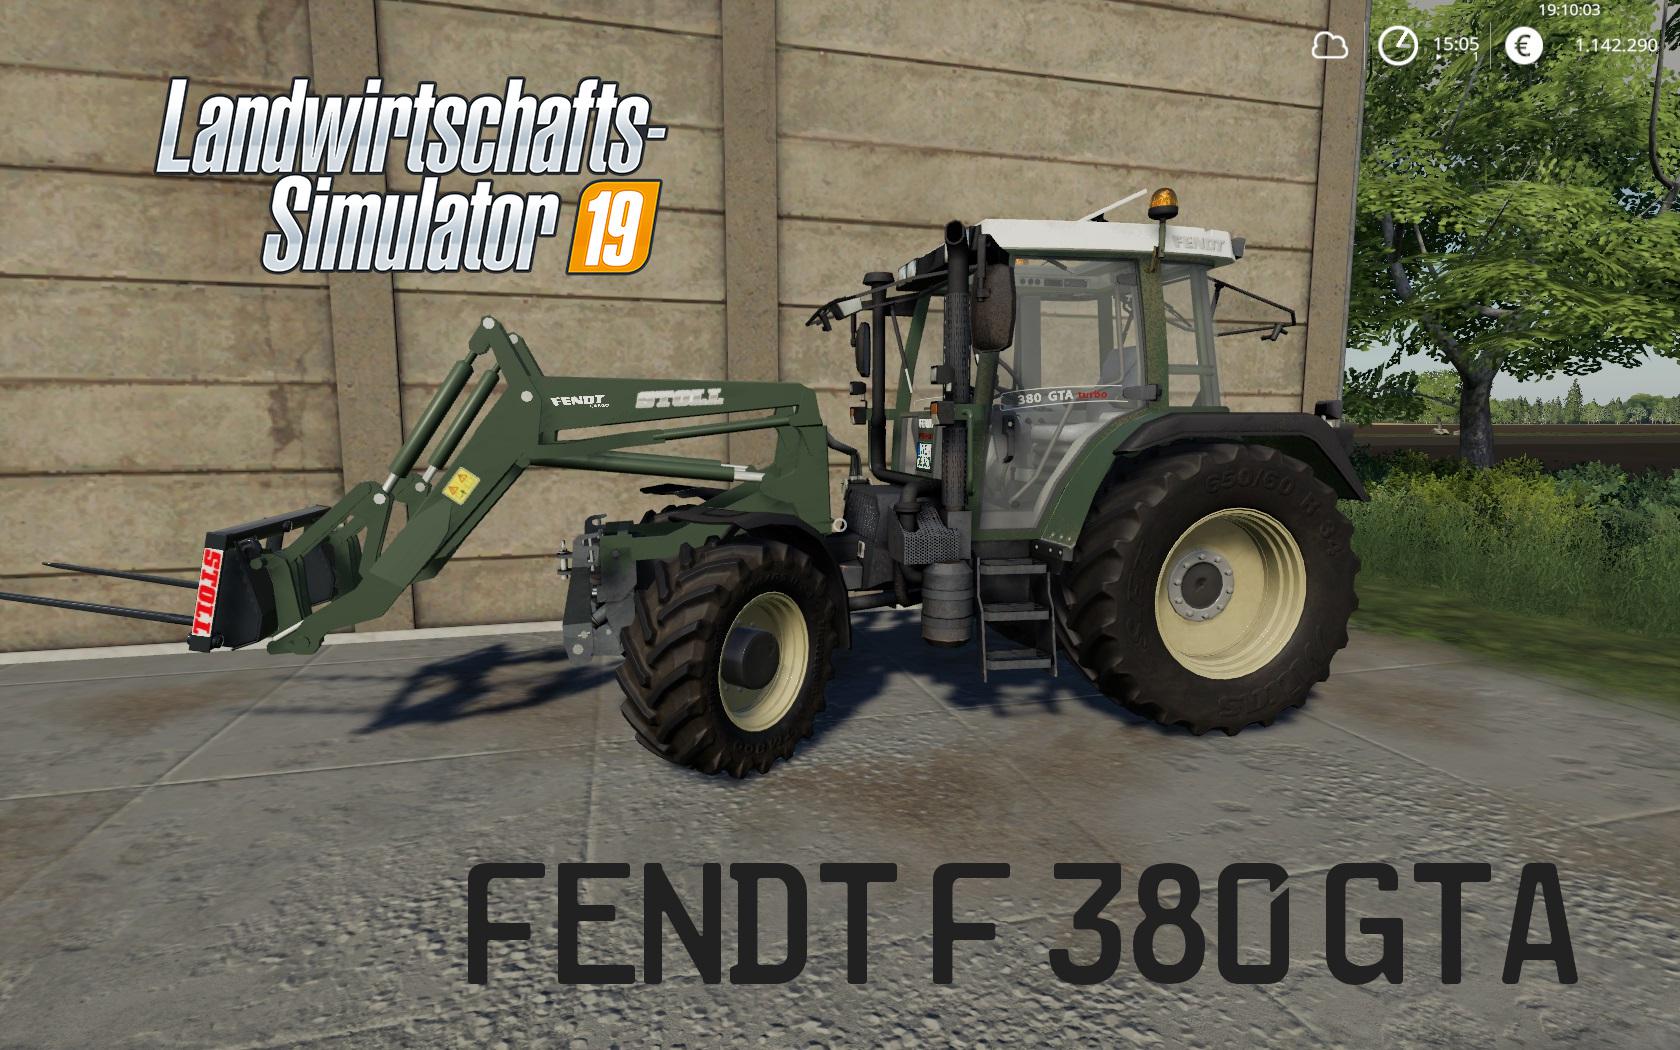 Fendt F 380GTA v 1.0.0.2